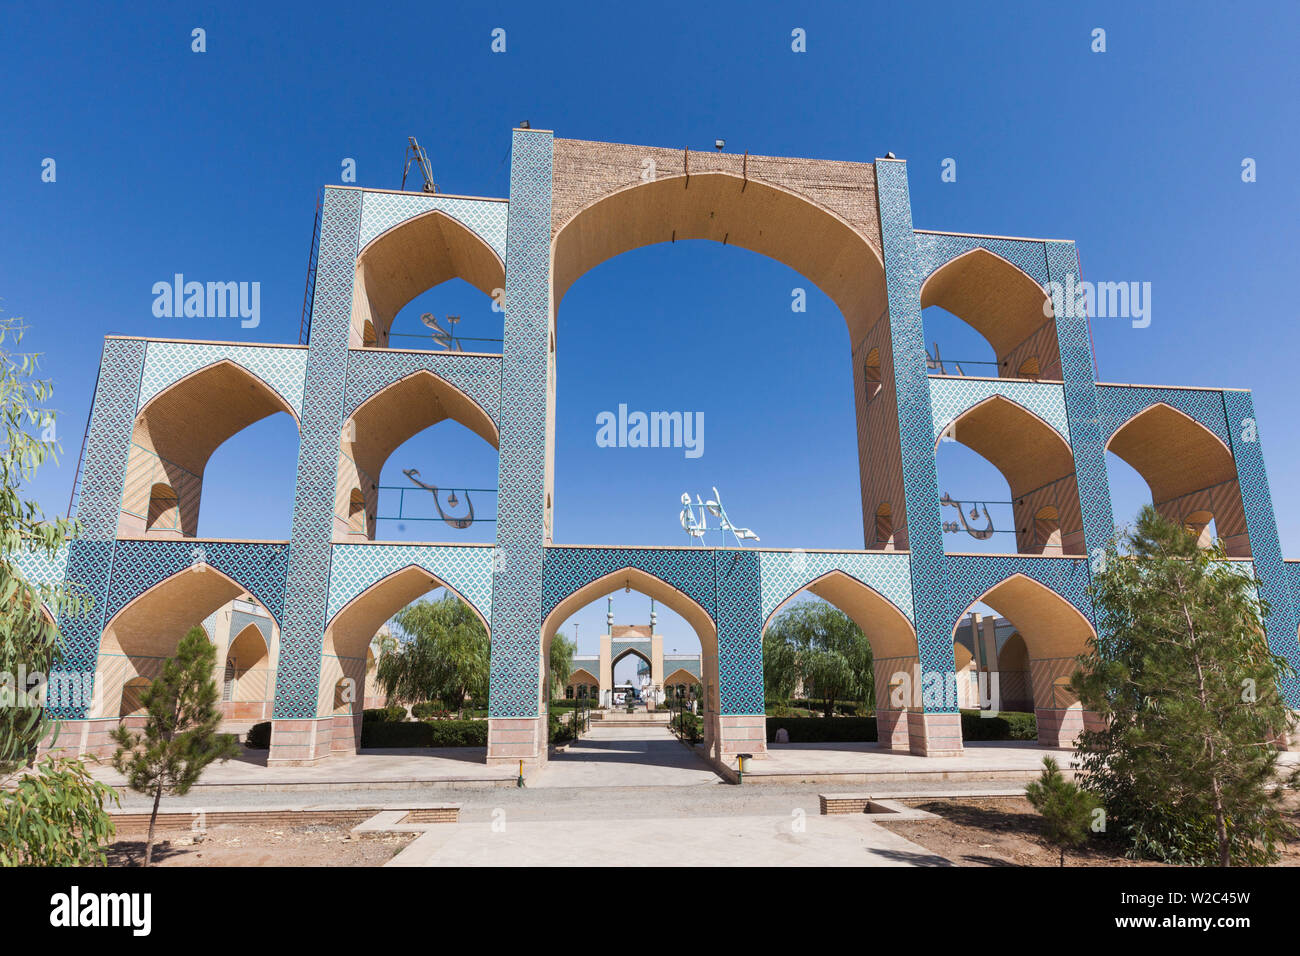 Iran, Central Iran, Kermanshah, ornamental gate and highway rest stop Stock Photo